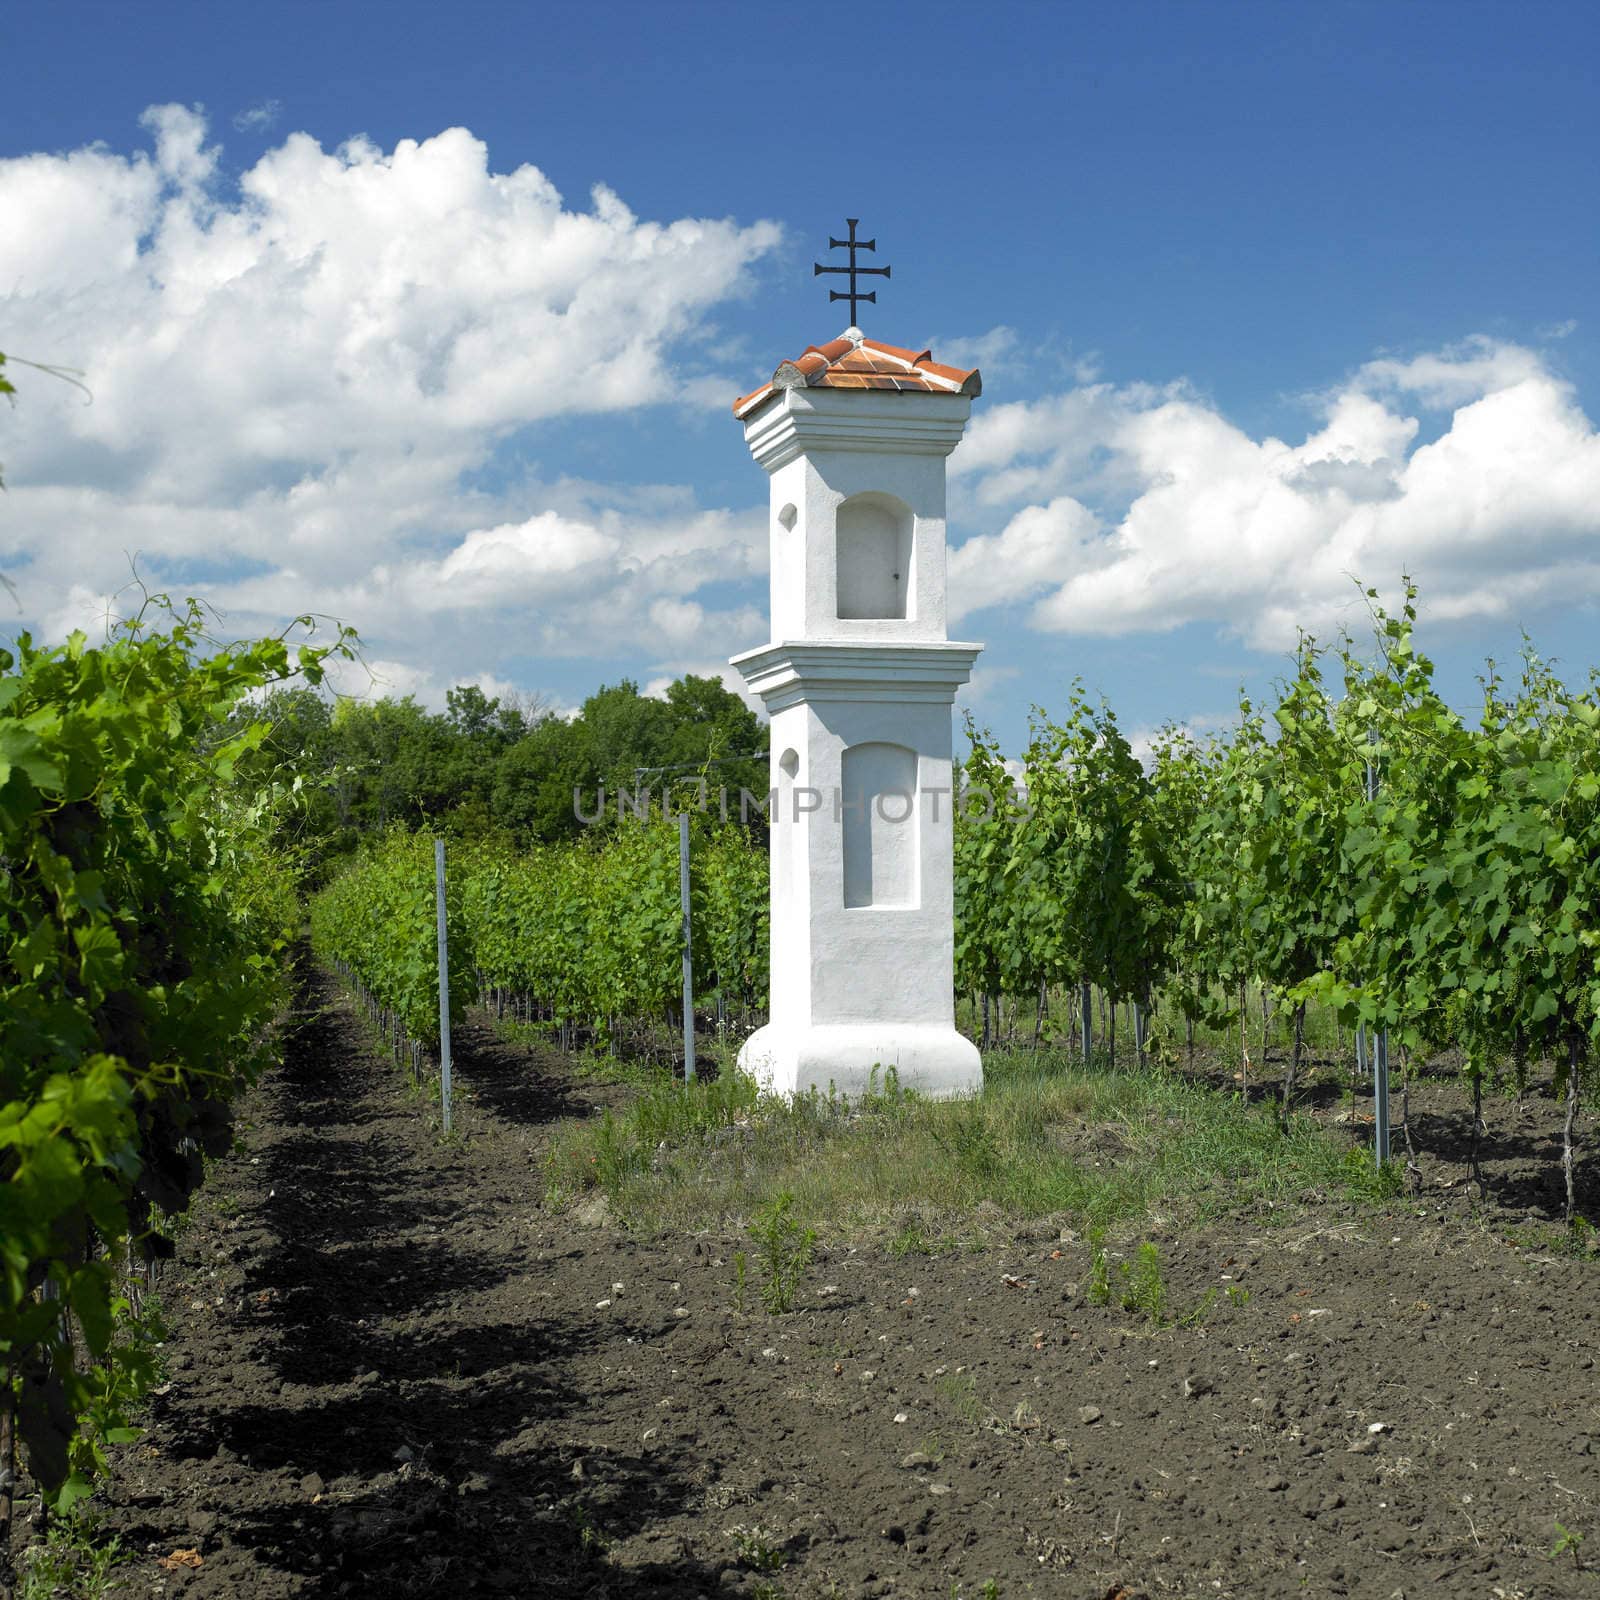 village chapel with wineyard near Perna, Czech Republic by phbcz